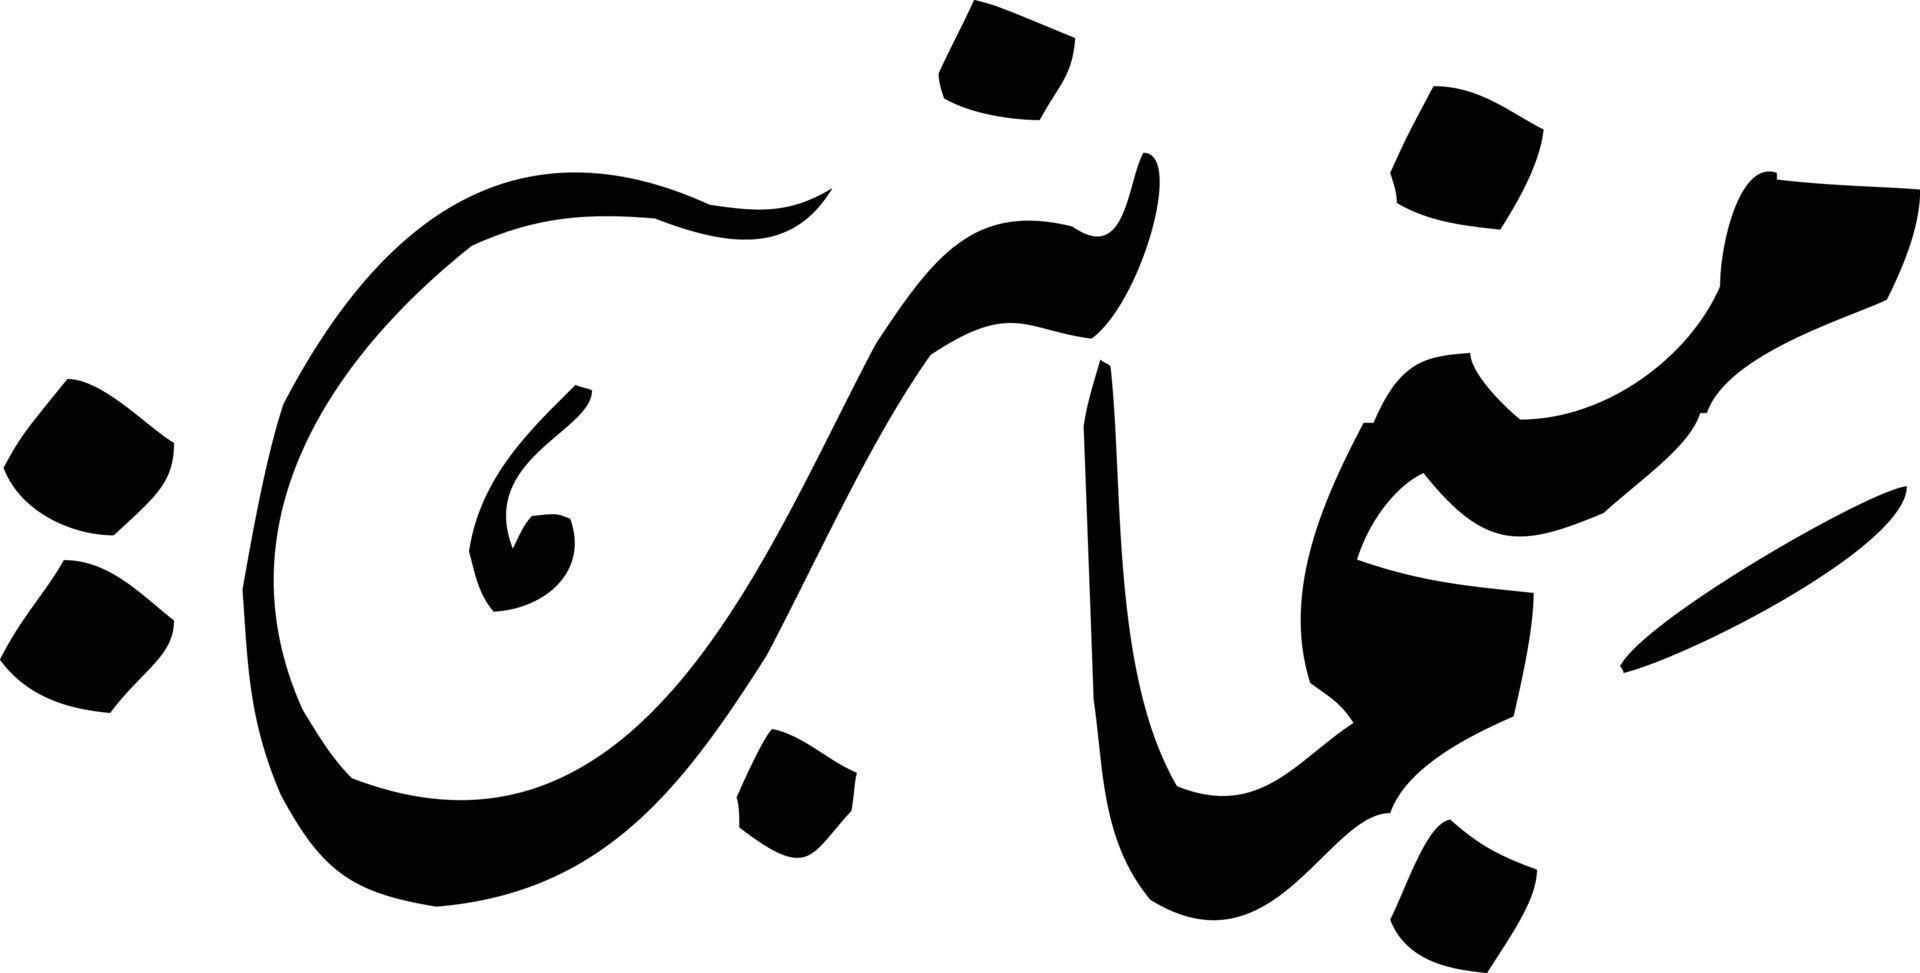 vetor livre de caligrafia islâmica minjanb